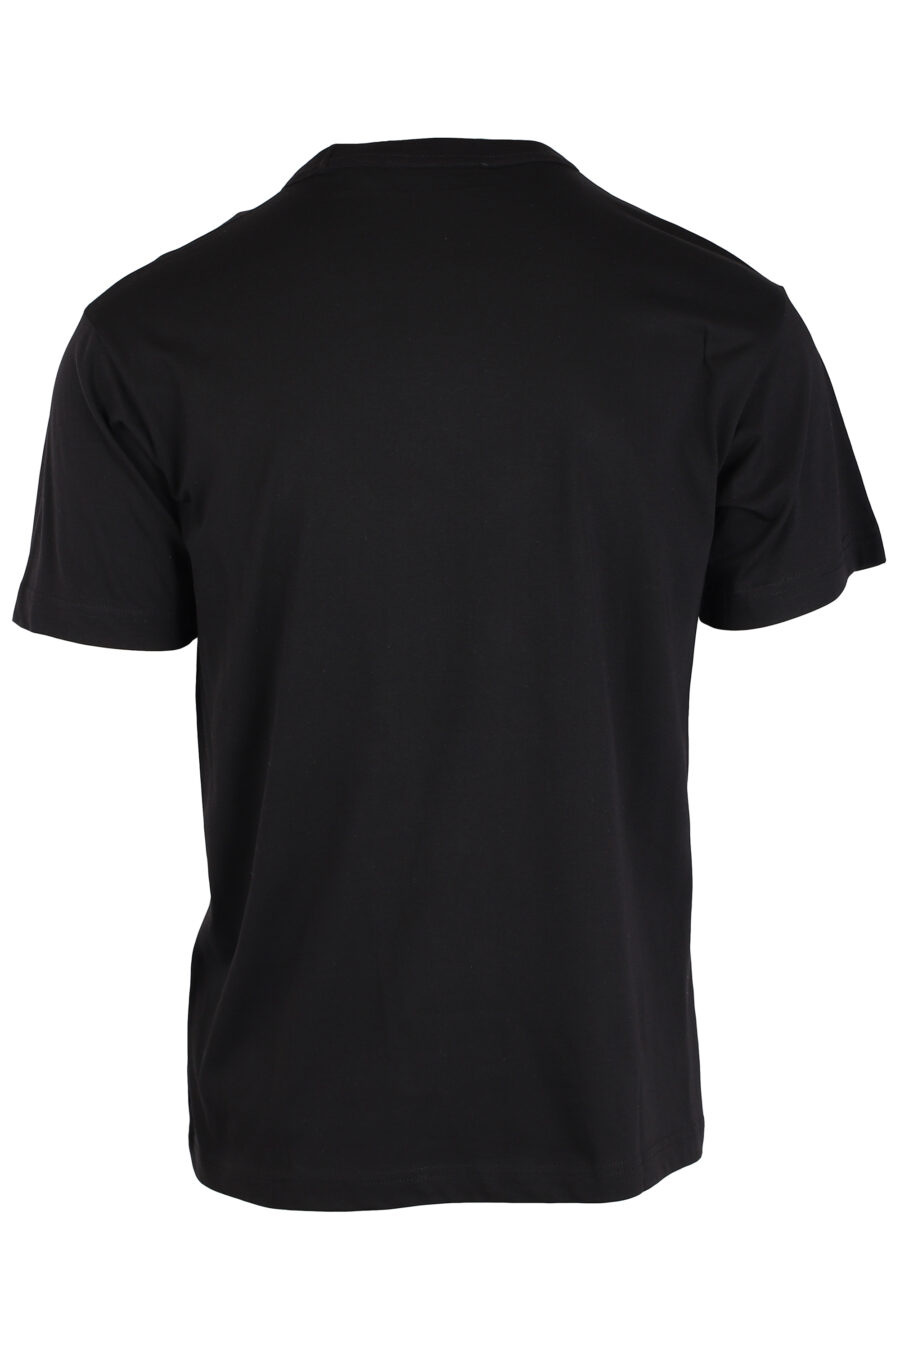 Black T-shirt with white round logo - IMG 4008